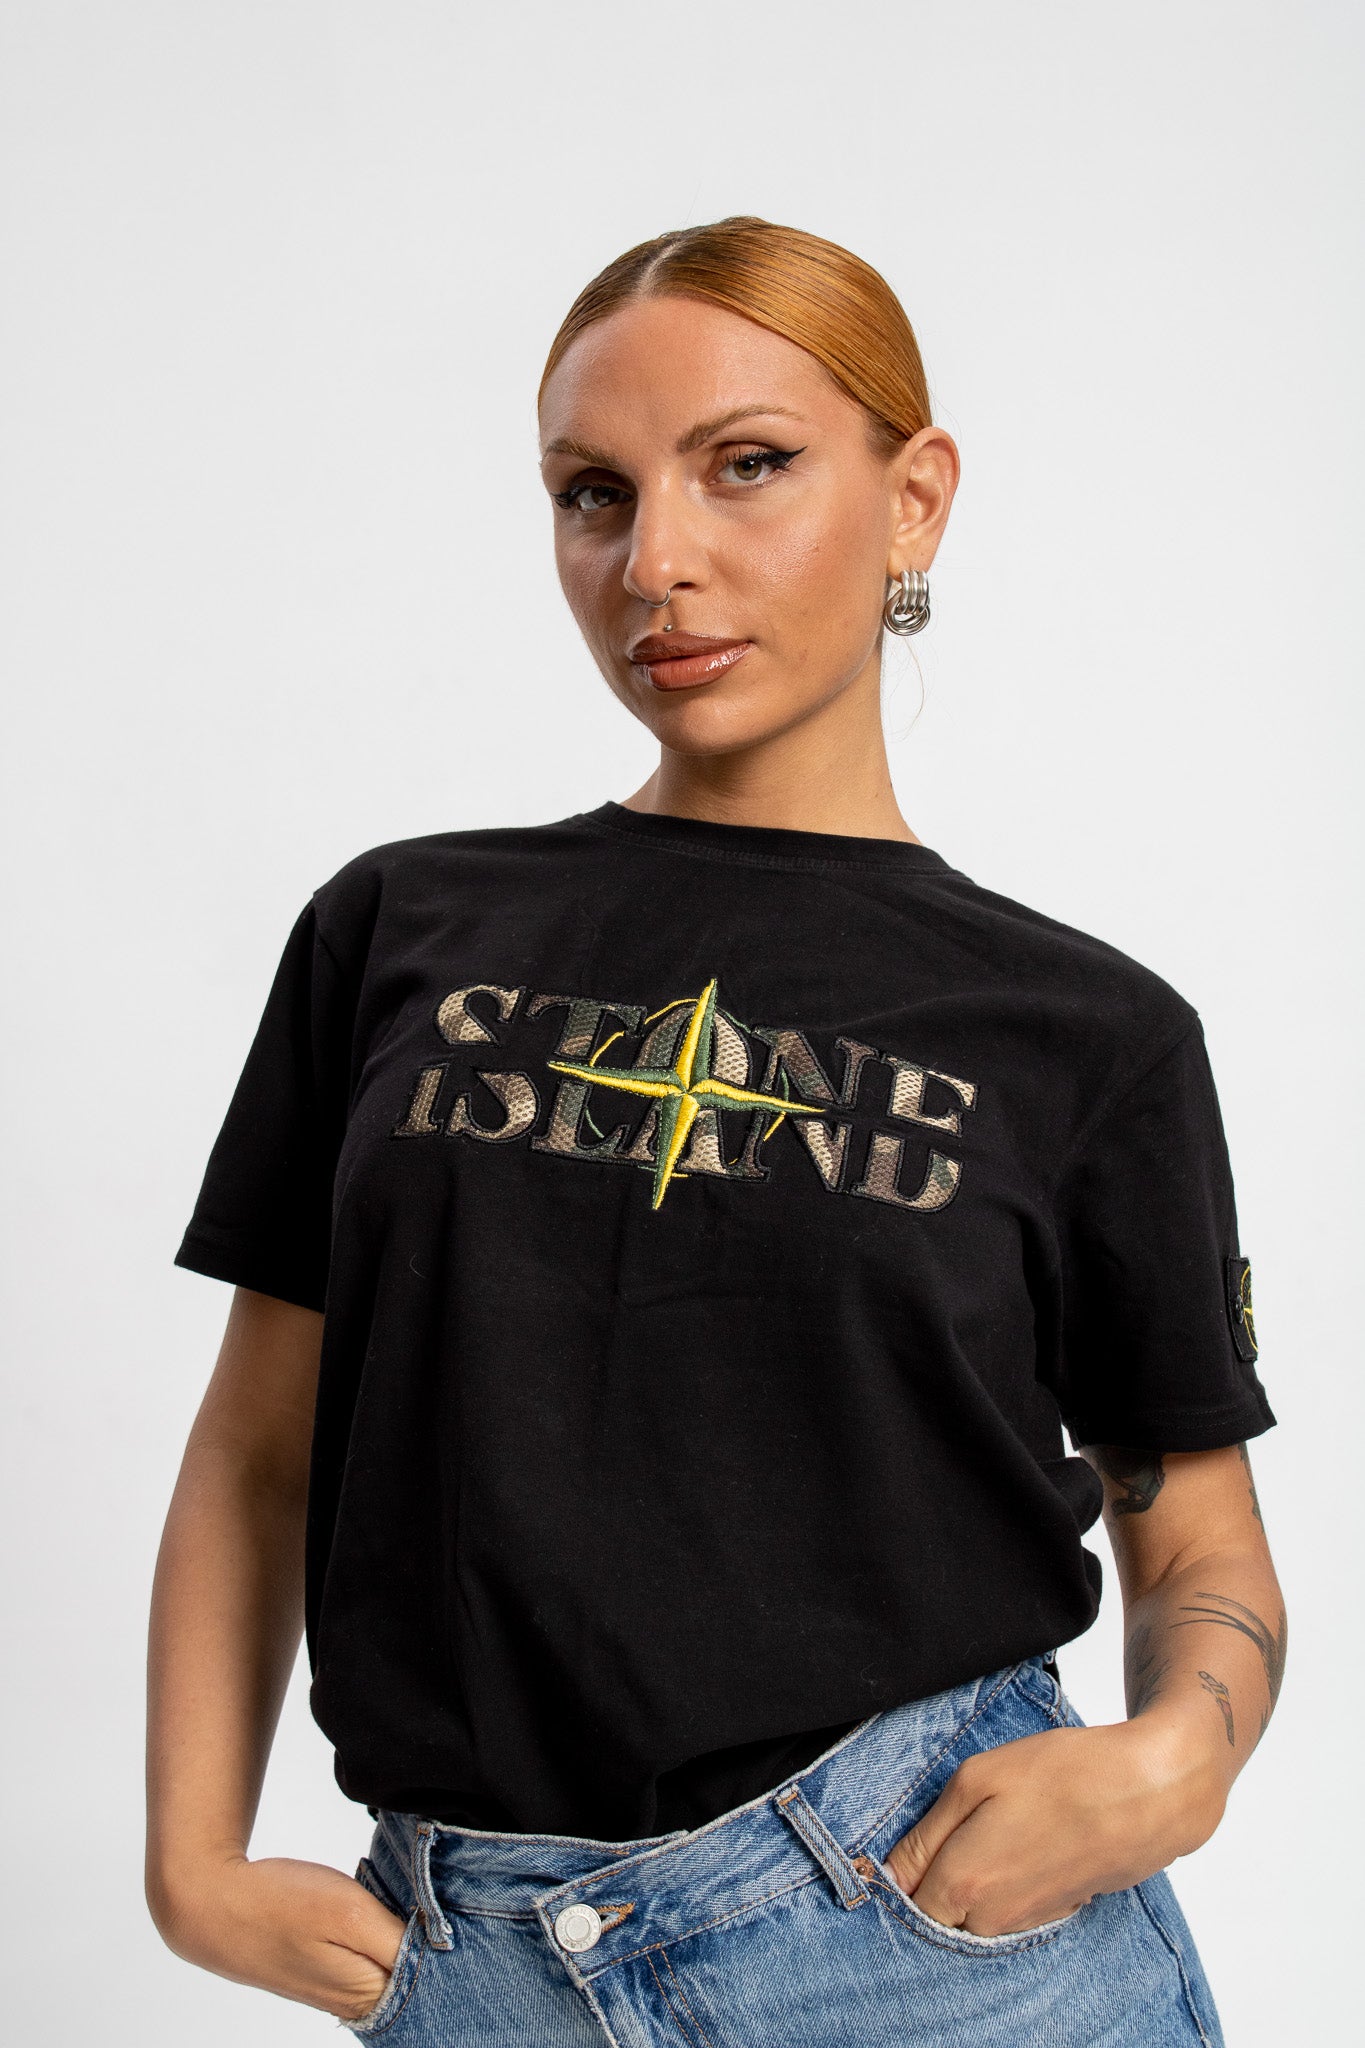 Stone Island t-shirt